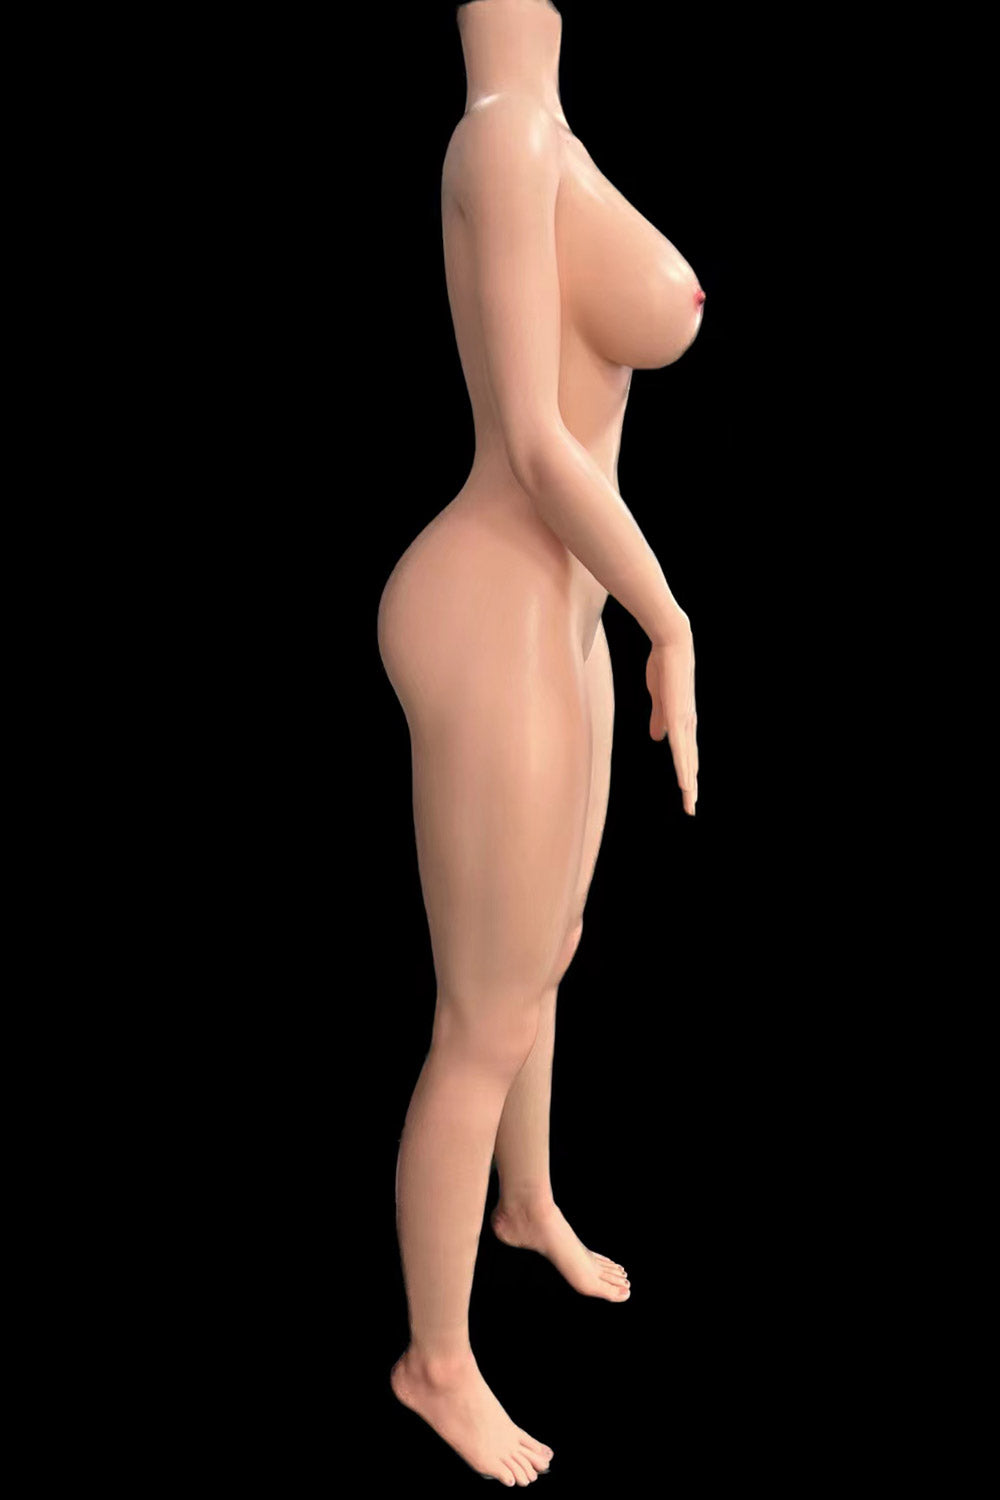 Helen 163cm Ancient Full Silicone Adult Love Doll Big Breasts Realistic BBW Sex Doll